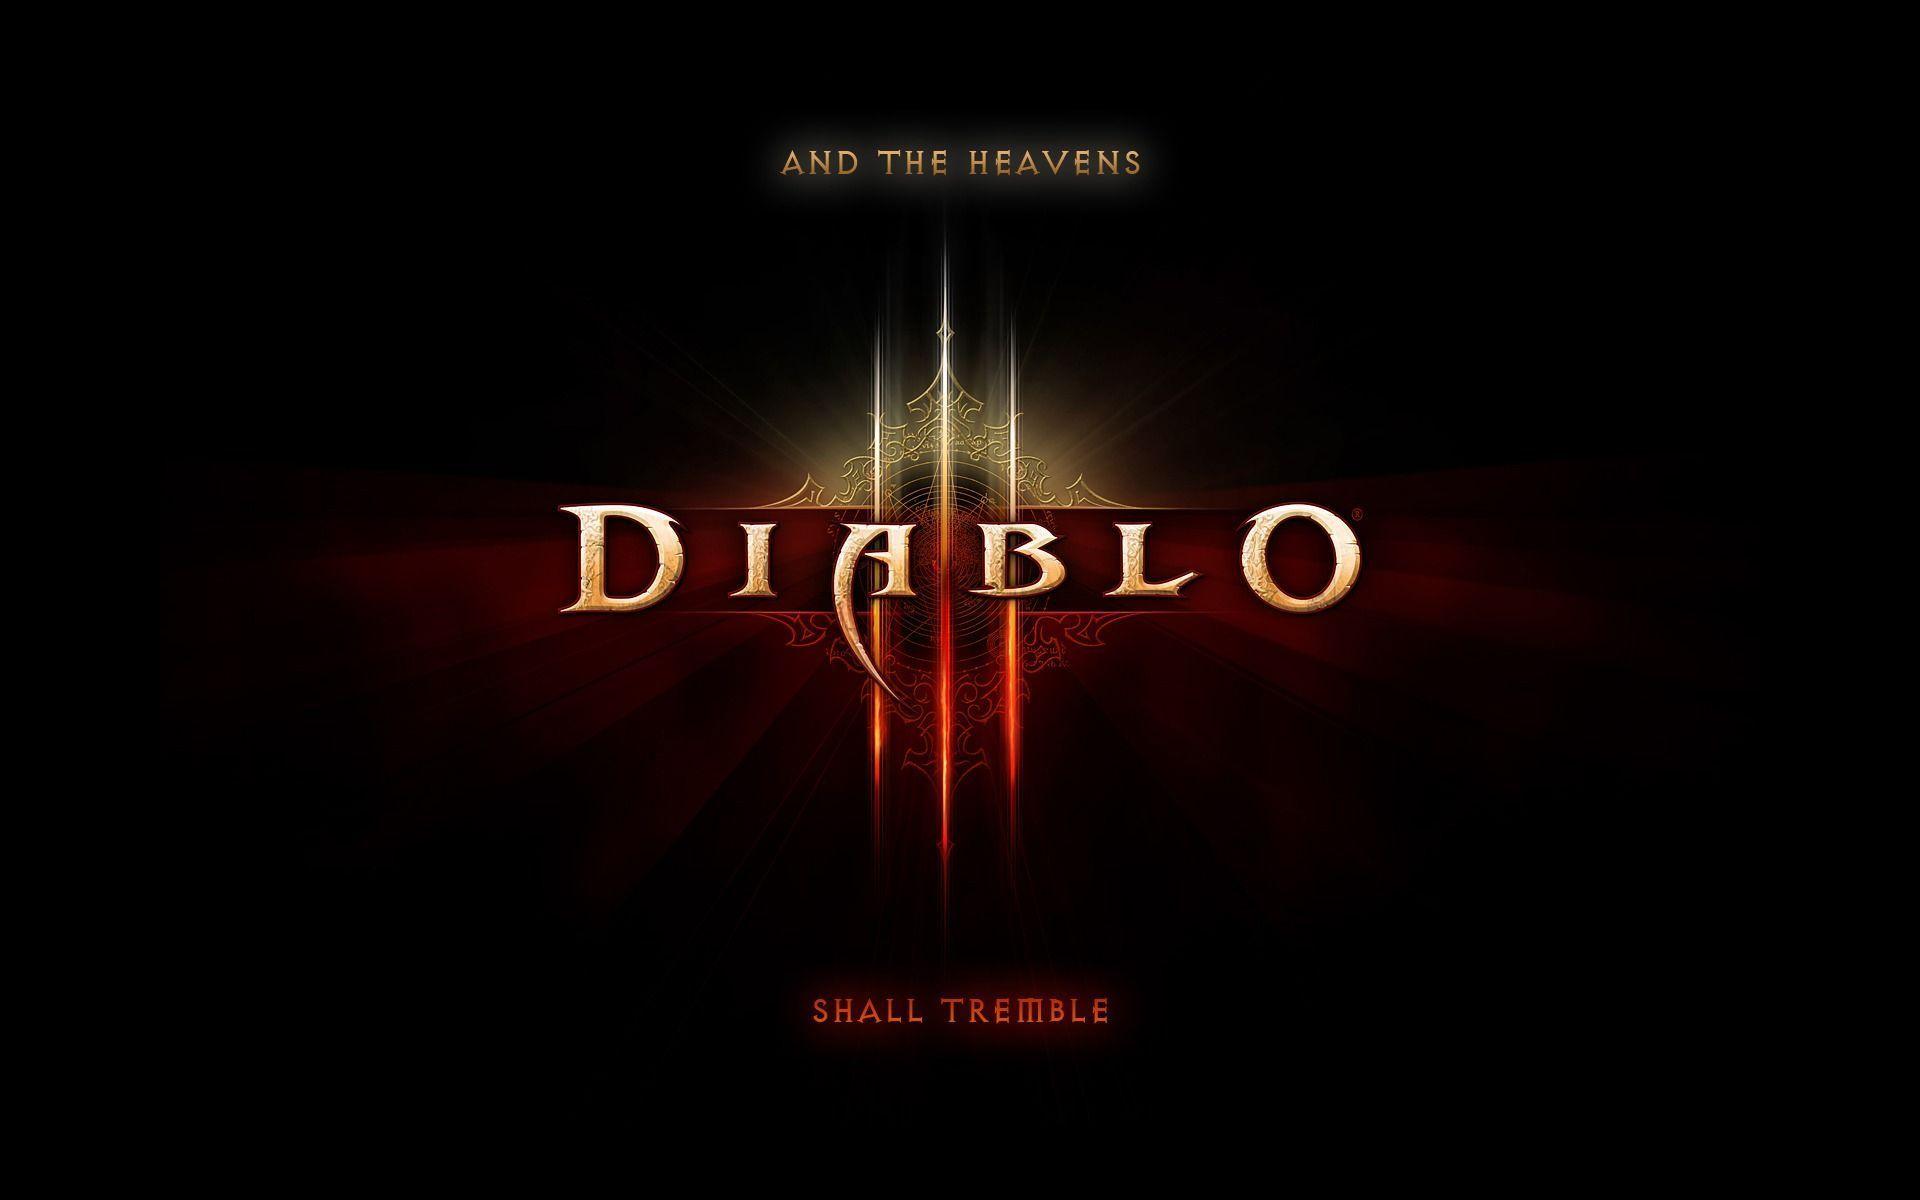 Diablo 3 Blizzard wallpaper and image, picture, photo